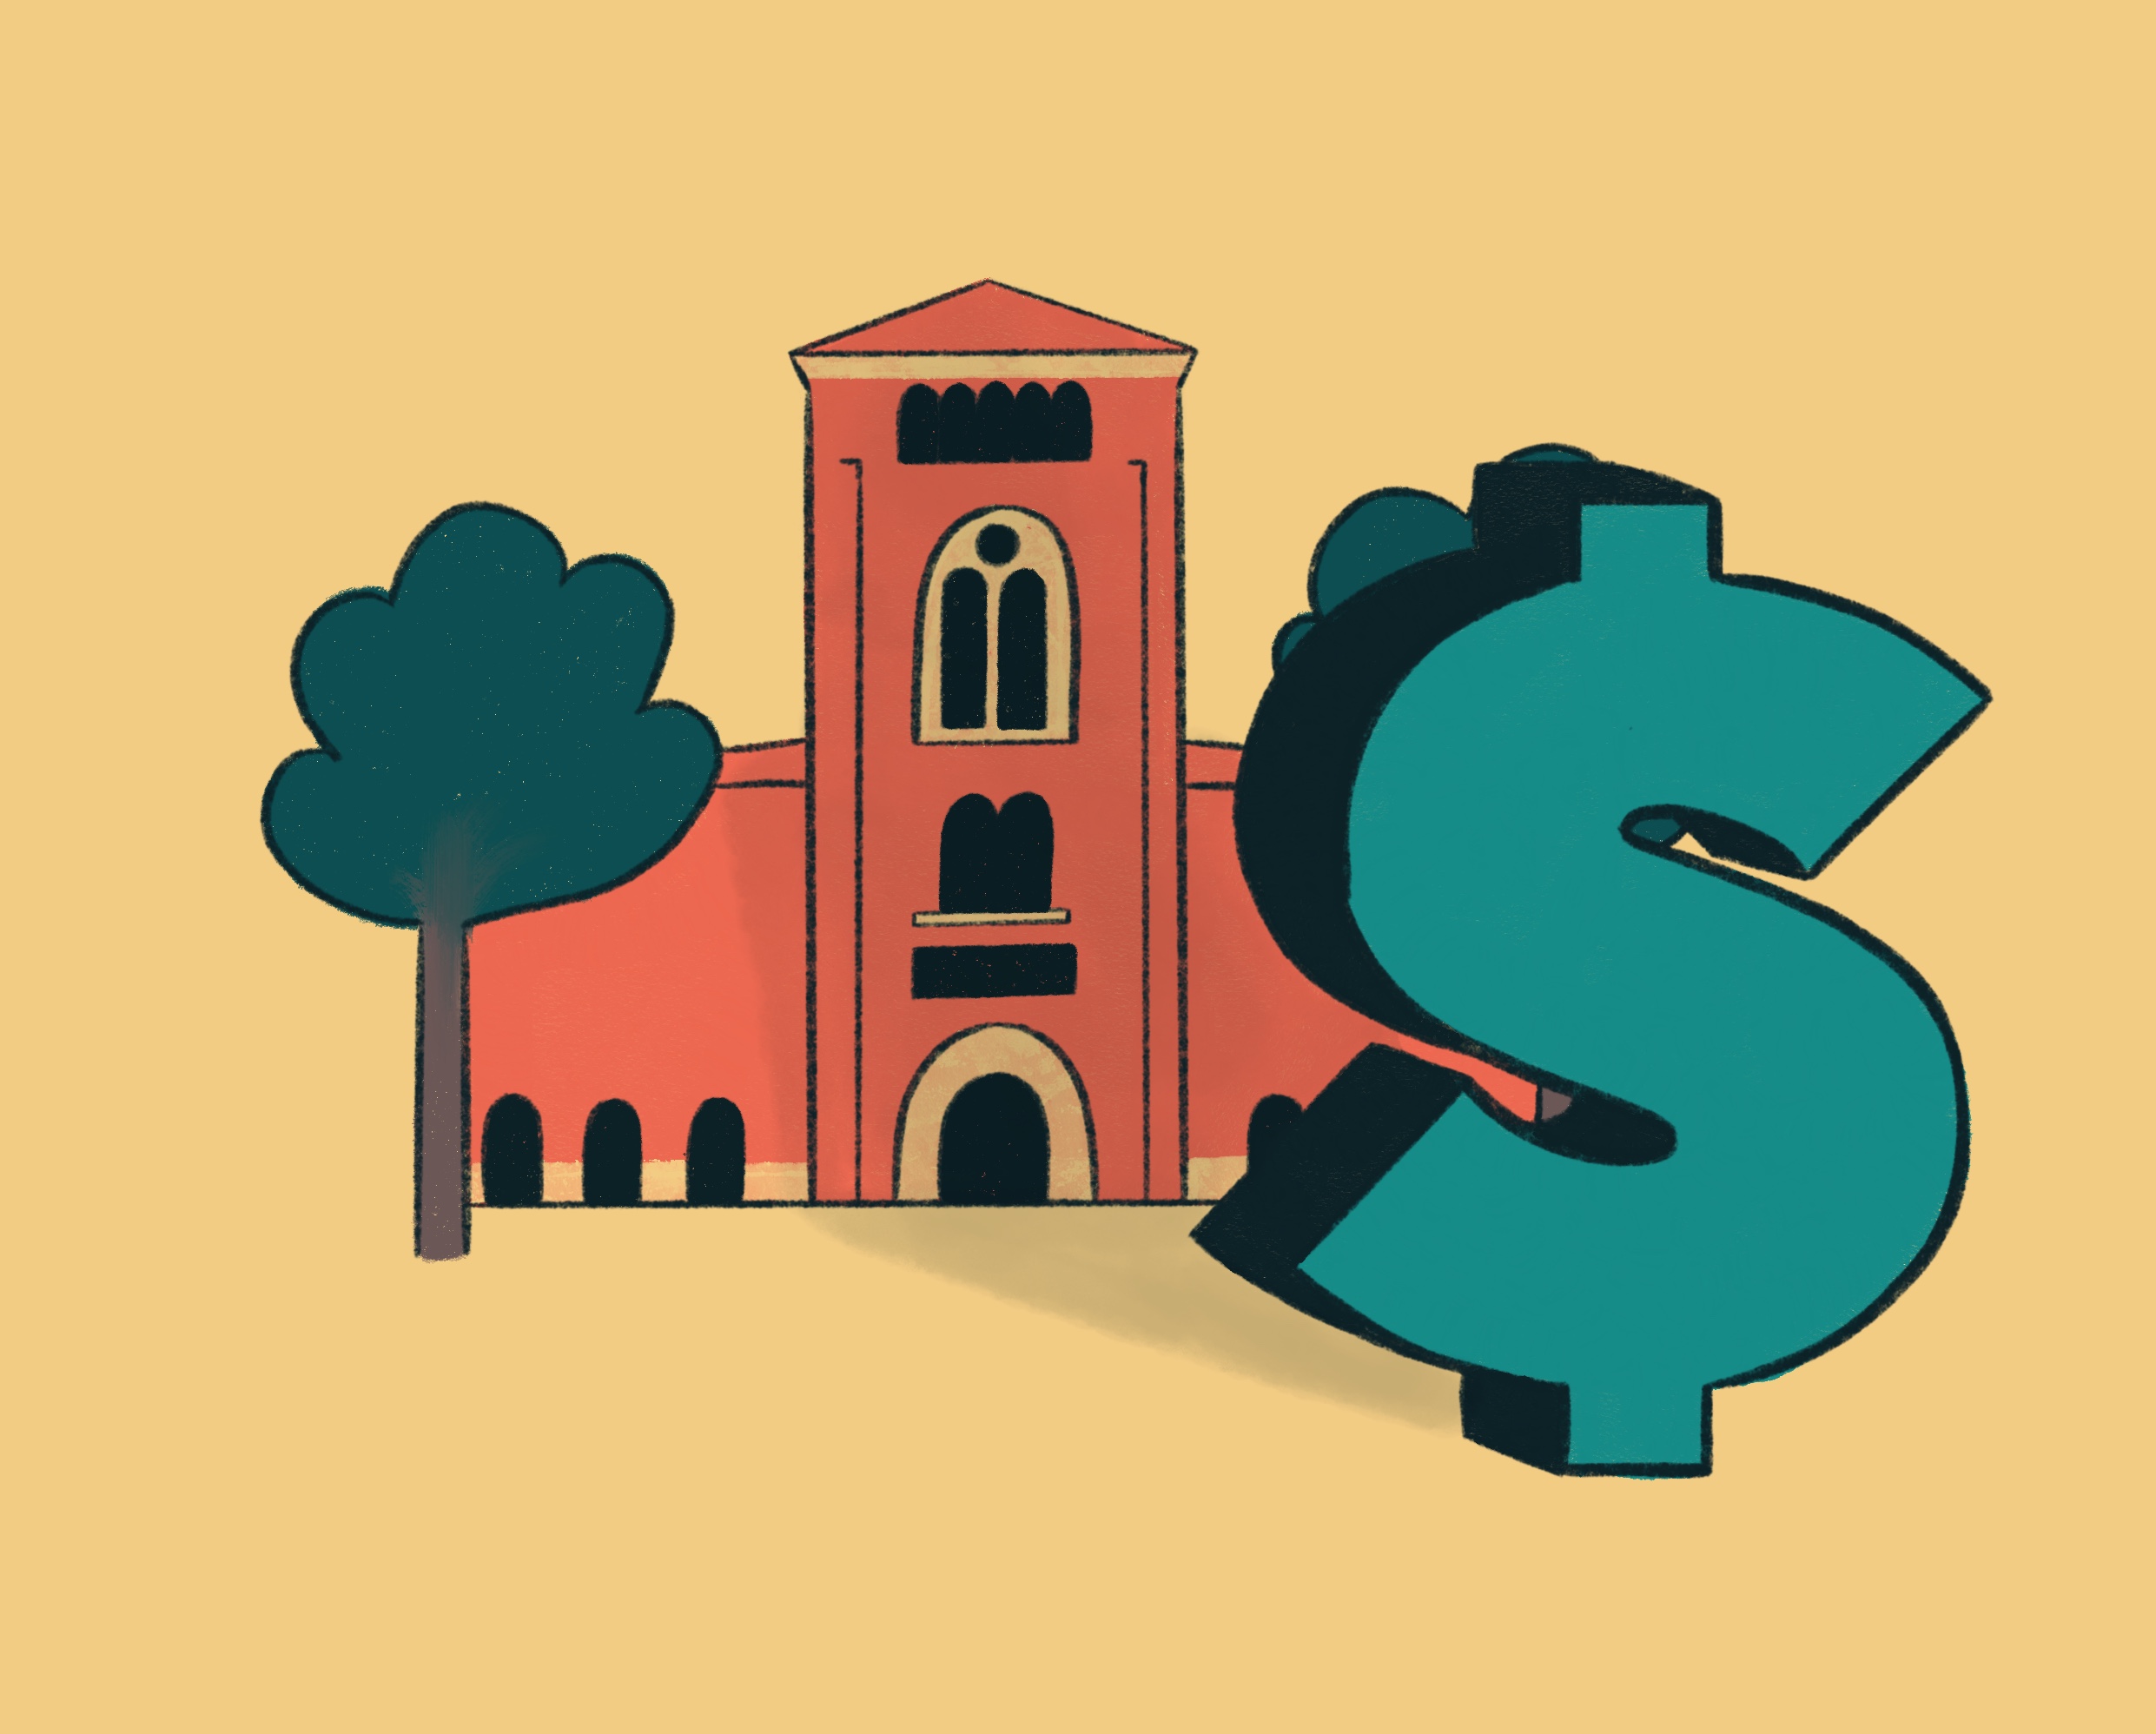 elite-universities-must-purpose-endowments-to-subsidize-students